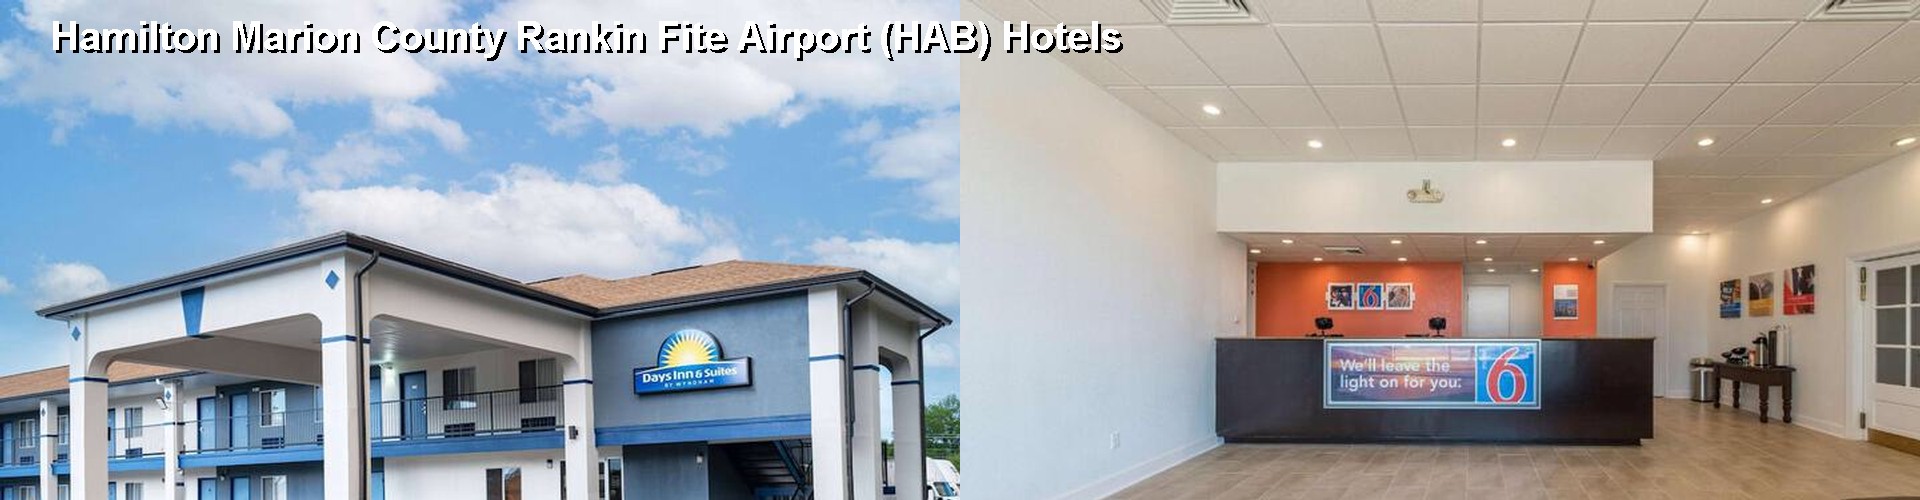 5 Best Hotels near Hamilton Marion County Rankin Fite Airport (HAB)